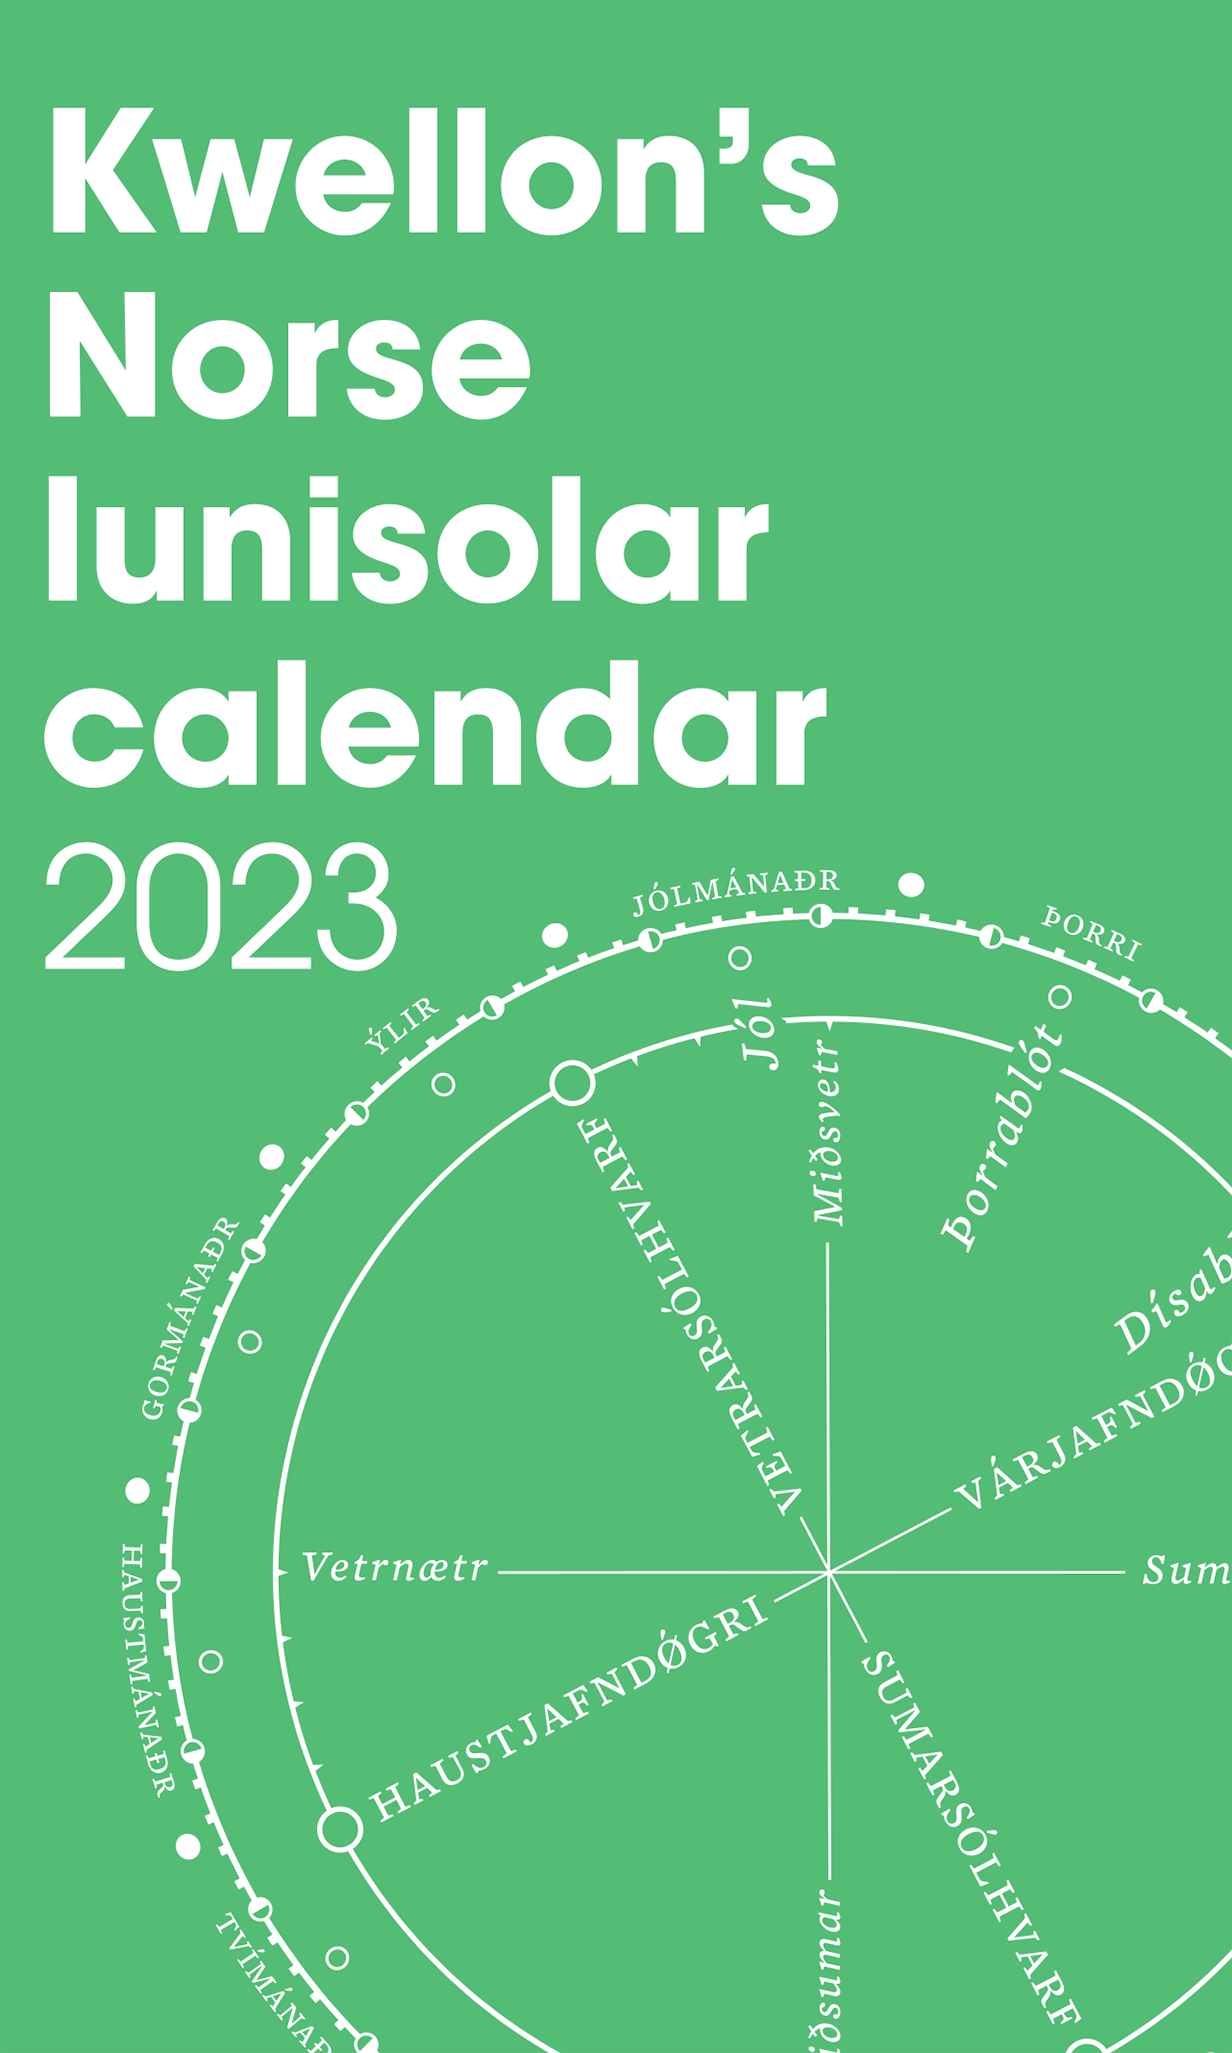 Kwellon’s Norse lunisolar calendar 2023